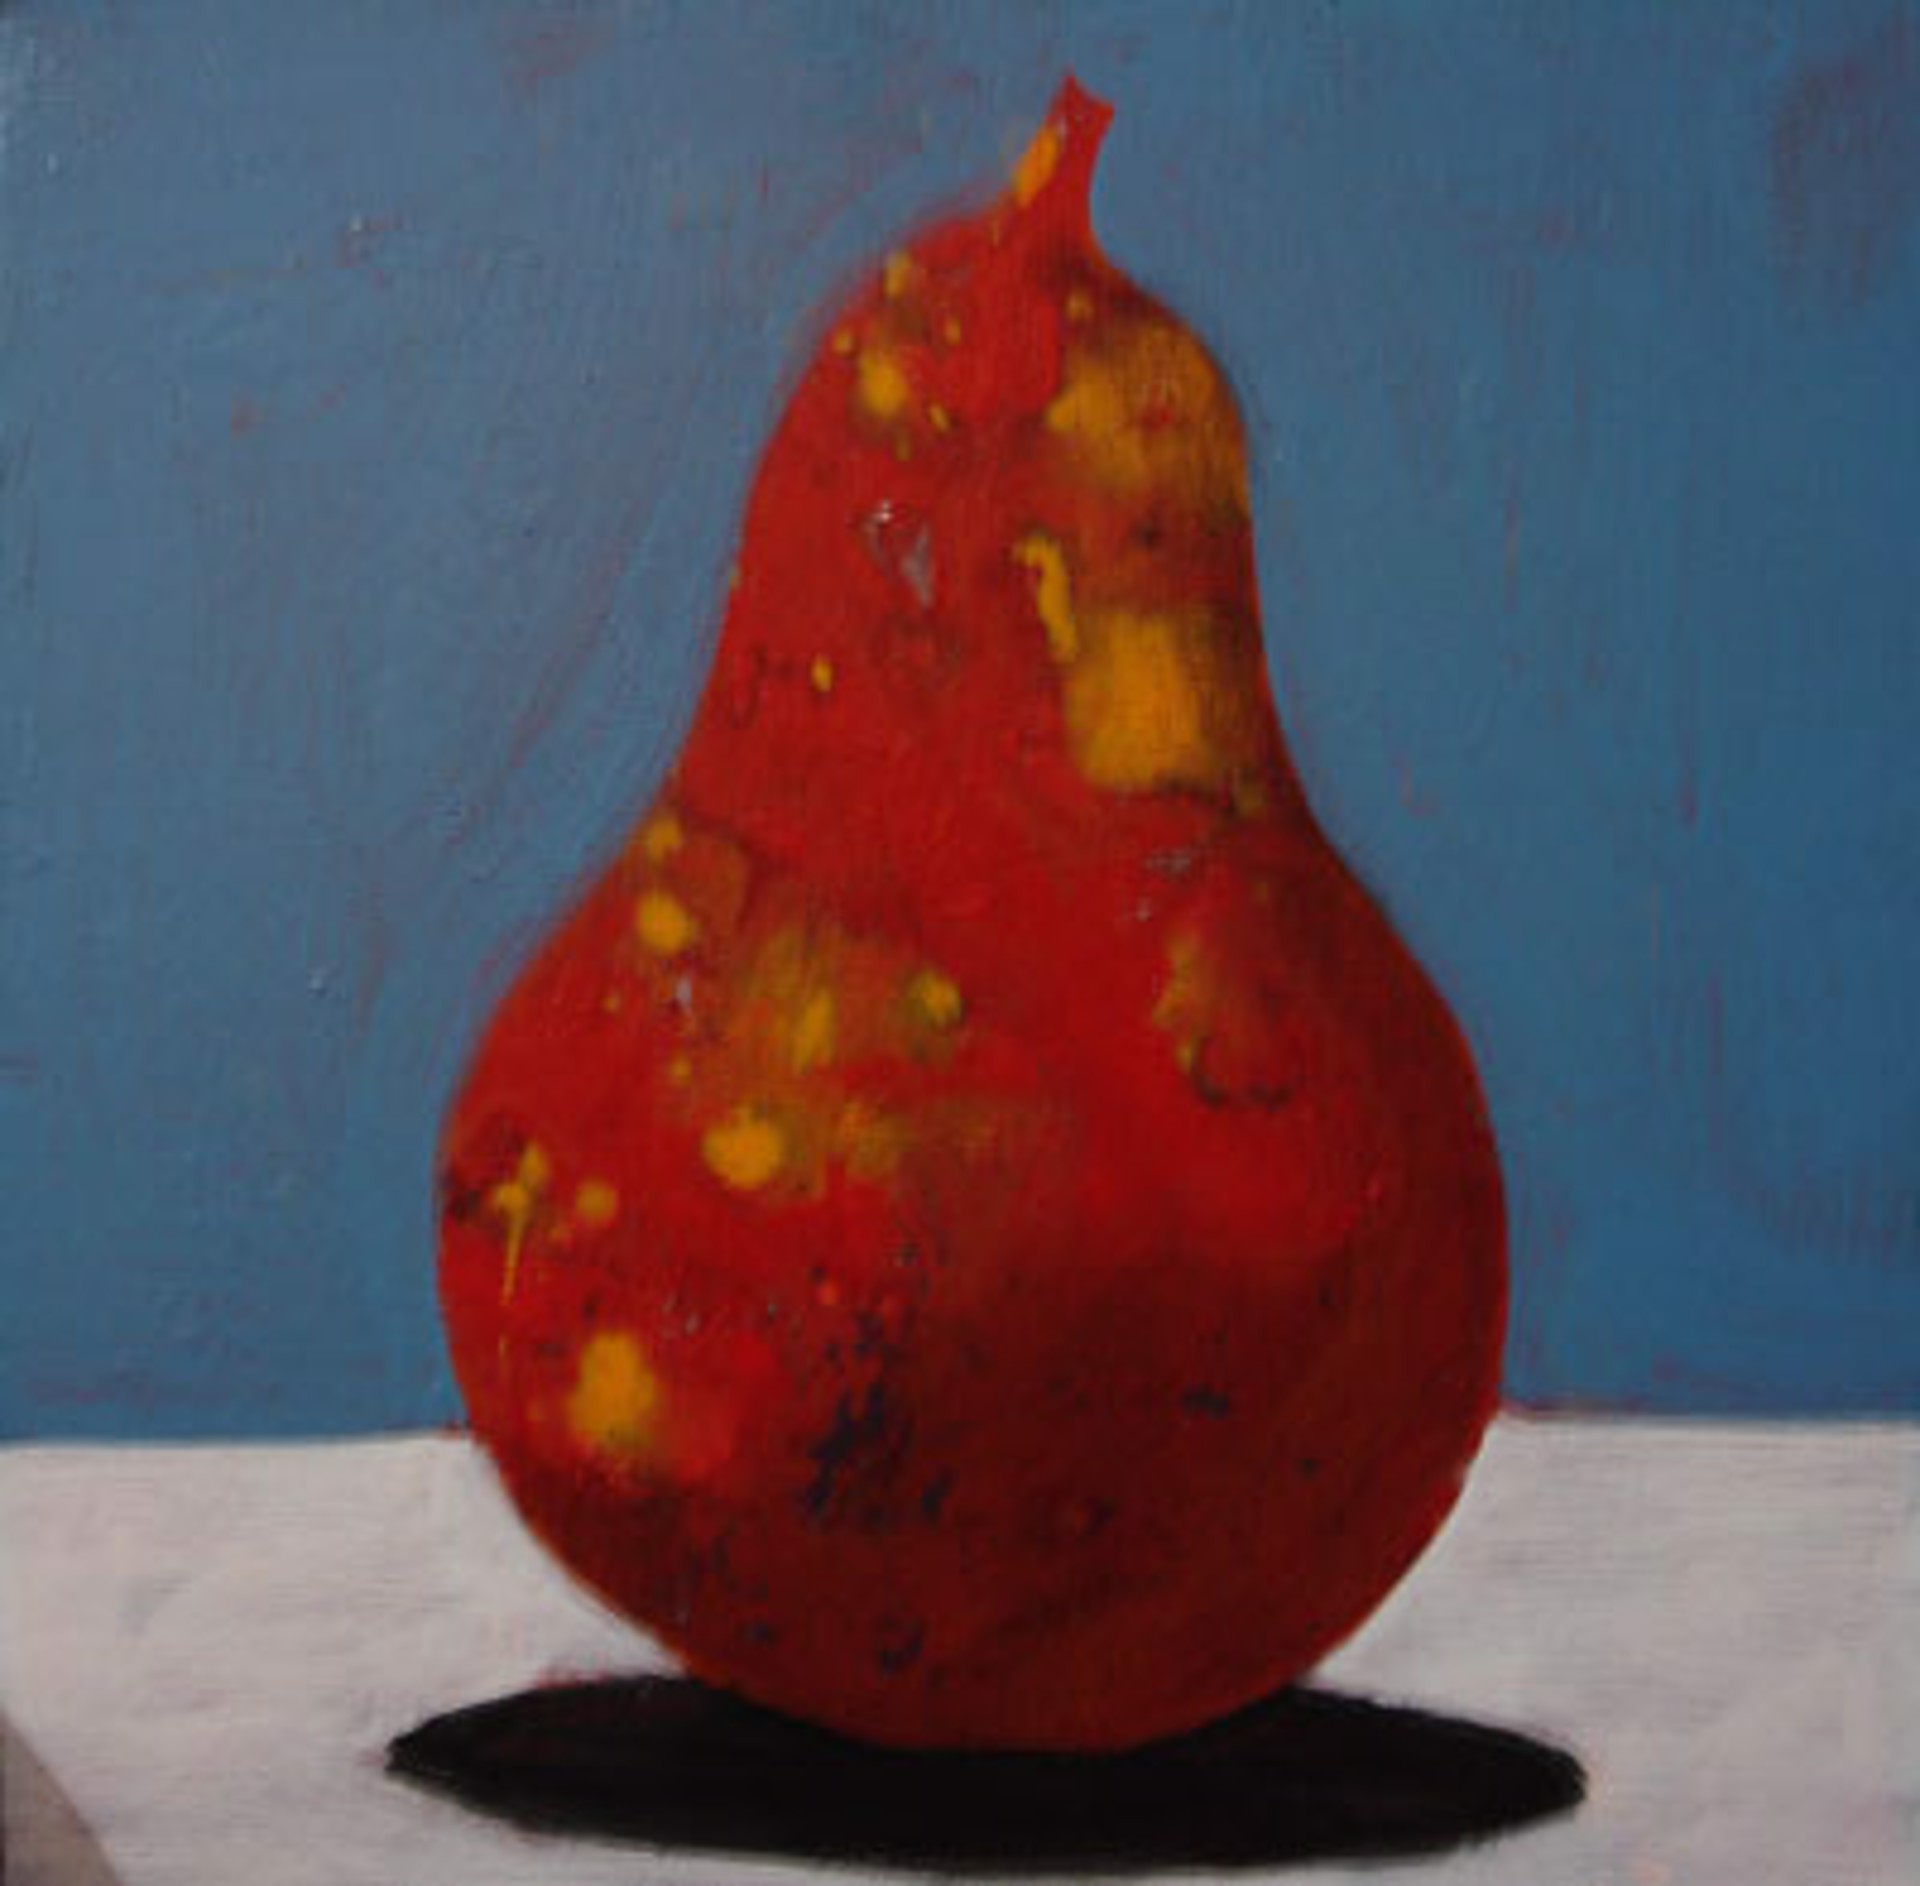 Pear 53 by Brian Hibbard